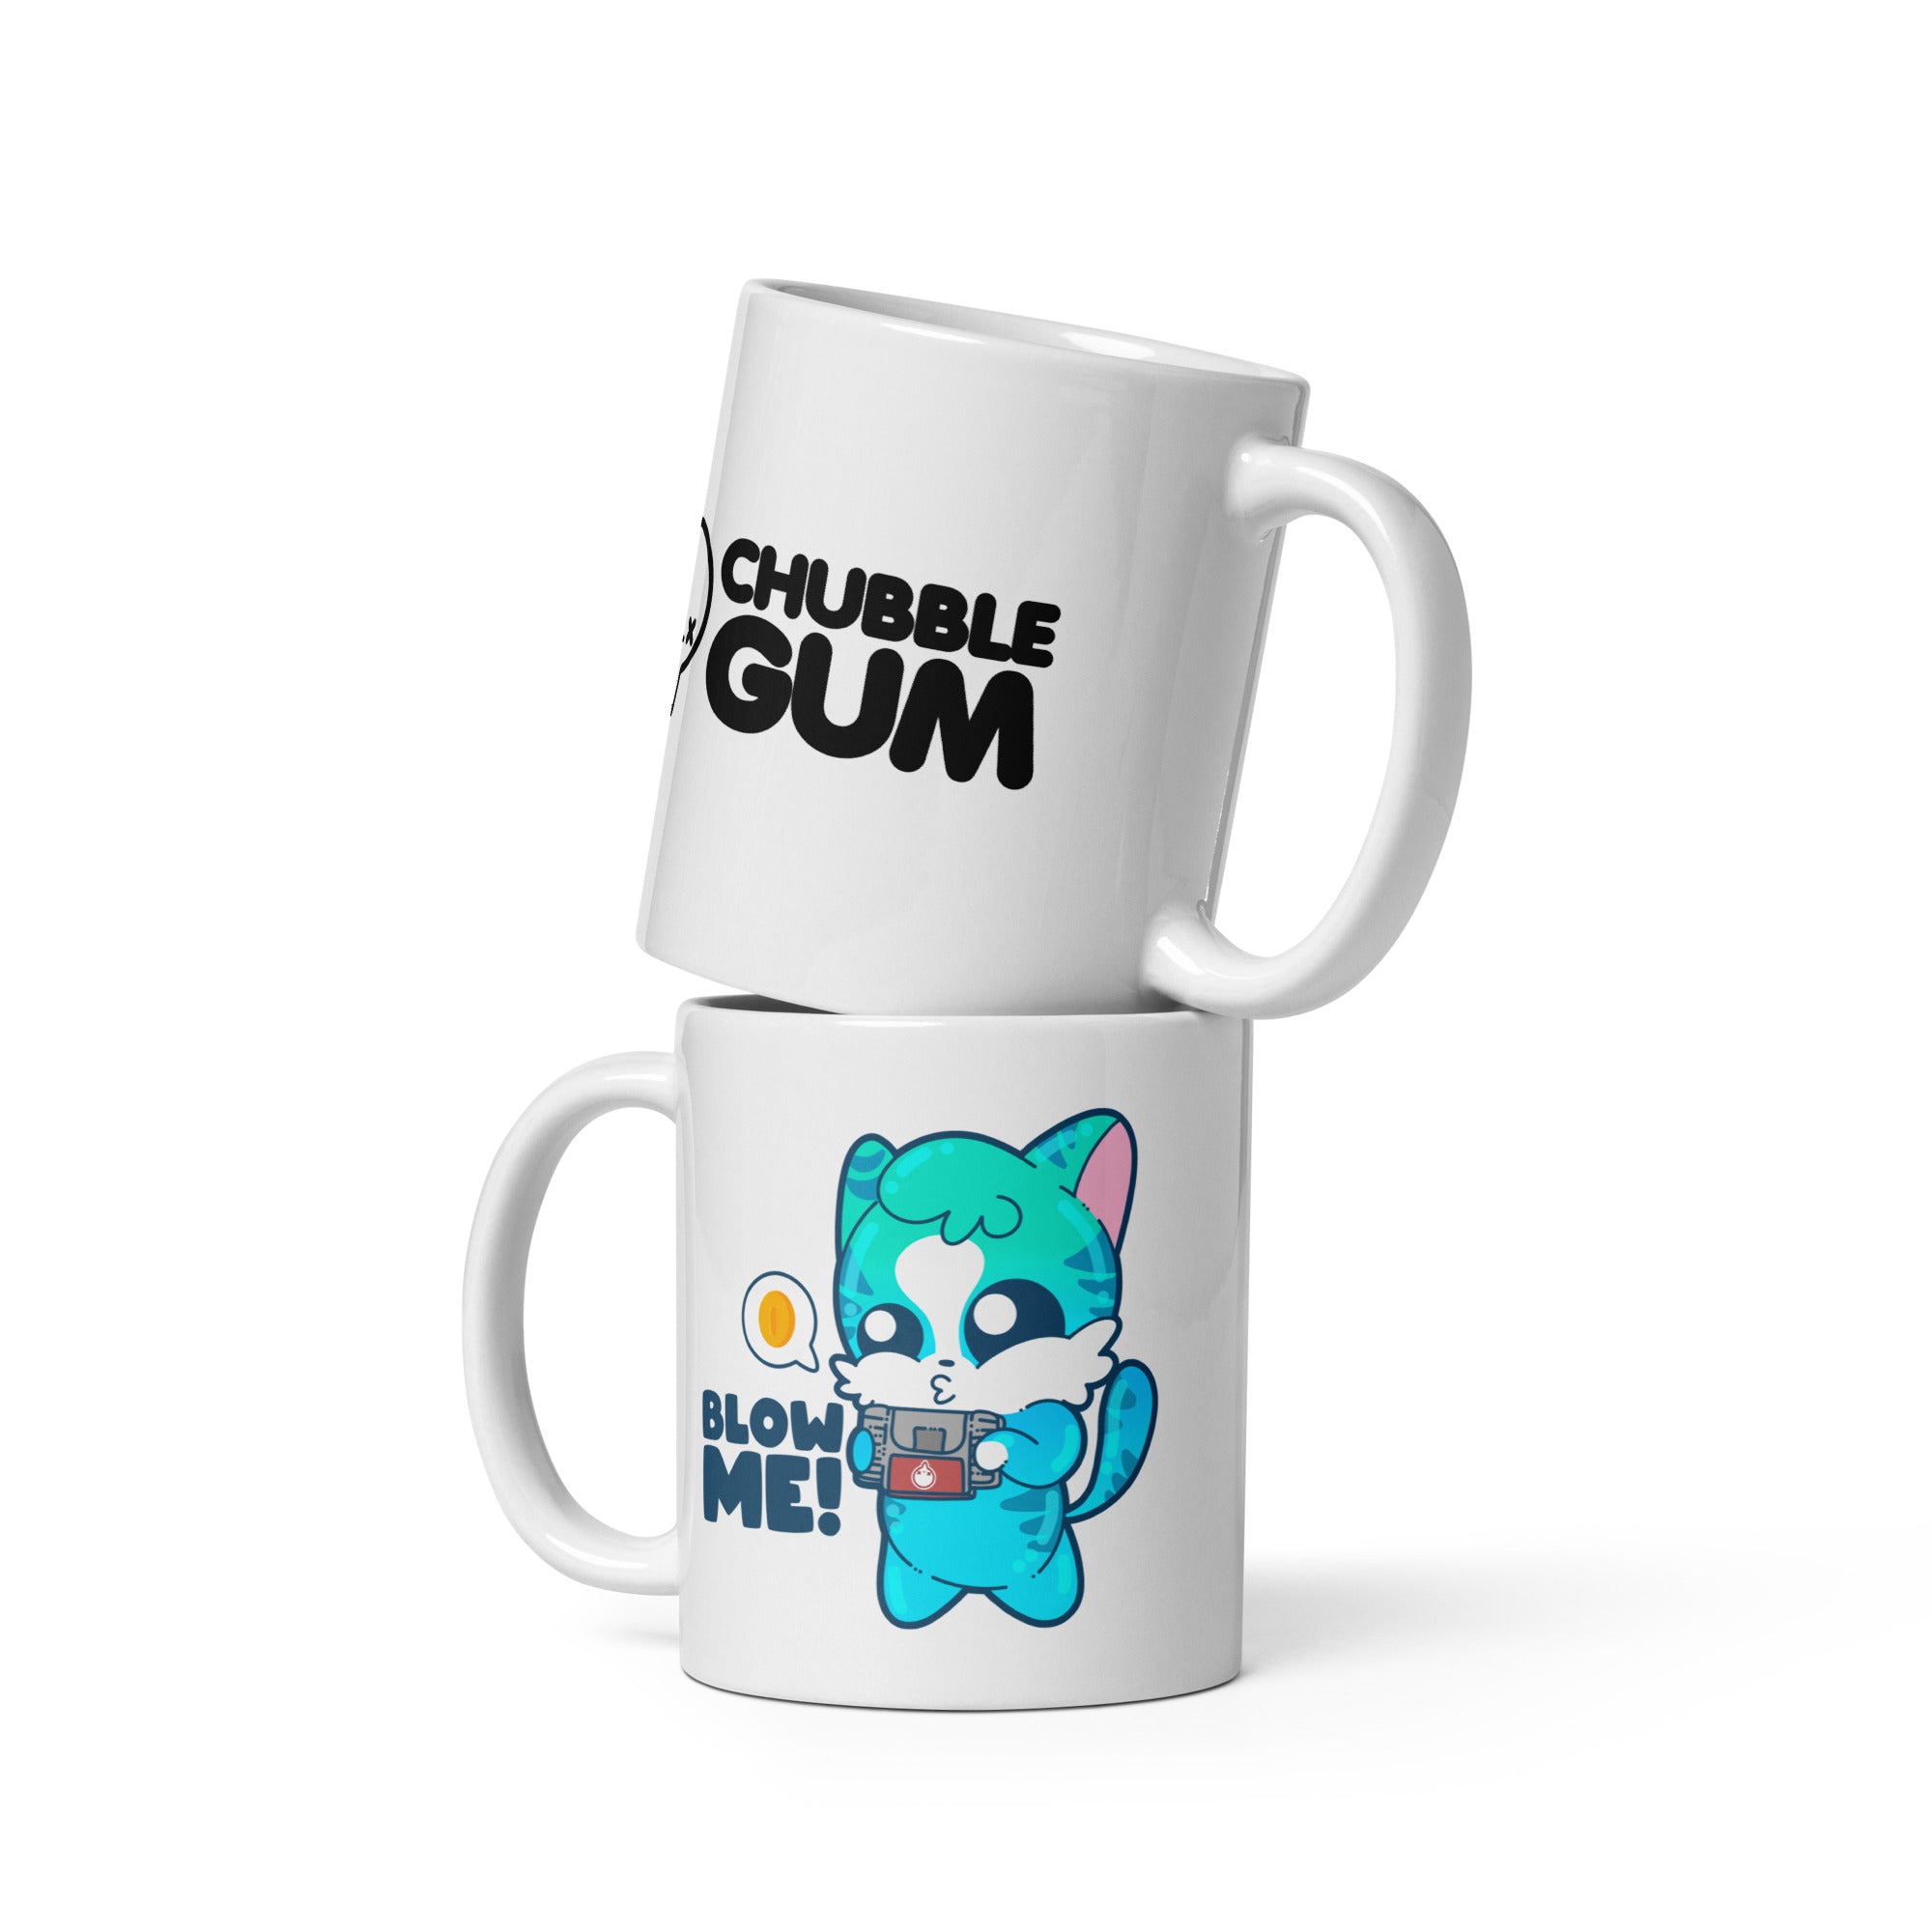 BLOW ME - Coffee Mug - ChubbleGumLLC